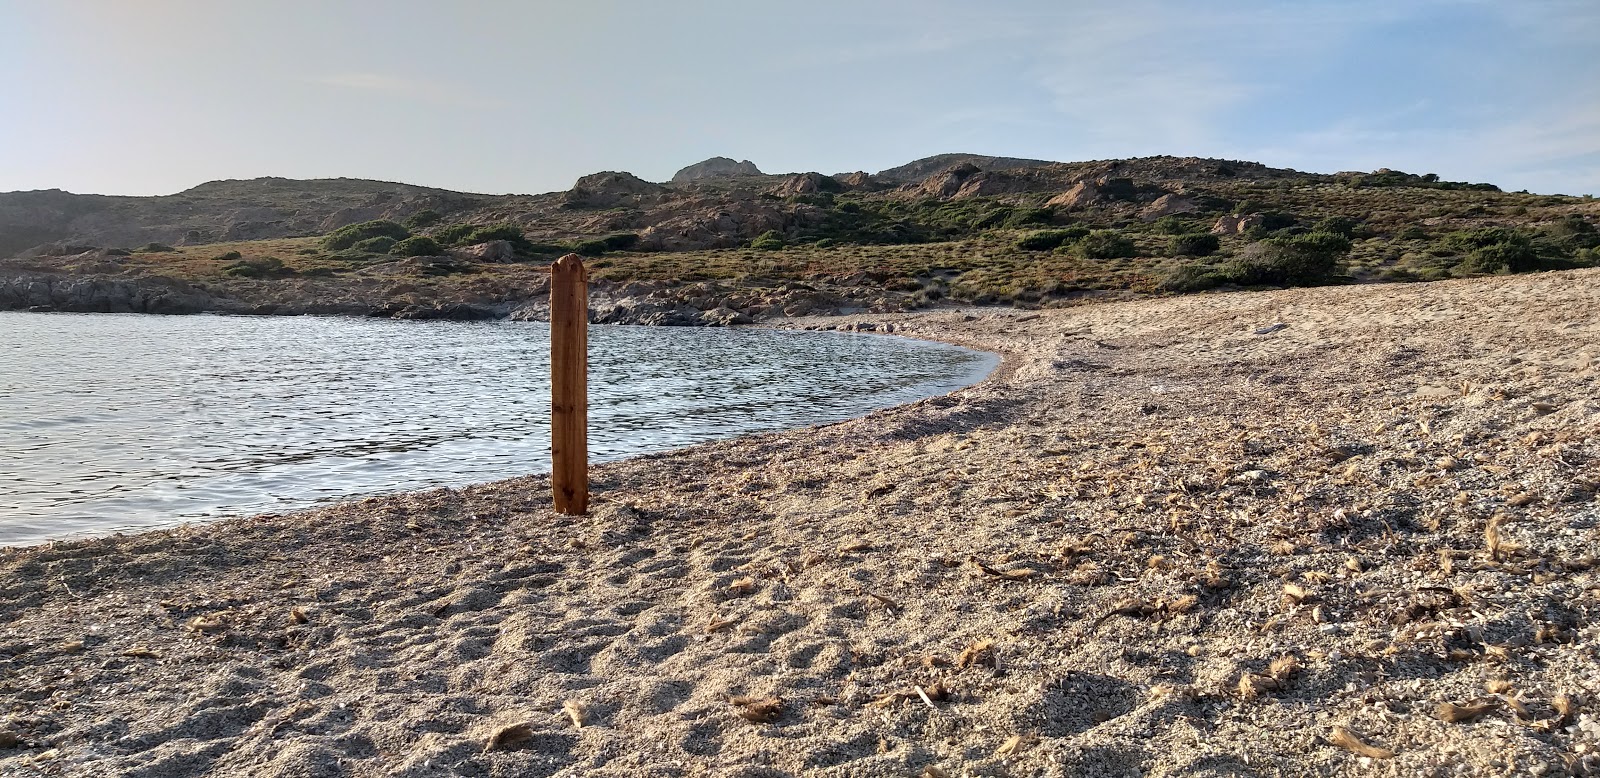 Fotografie cu Vana beach cu nivelul de curățenie in medie